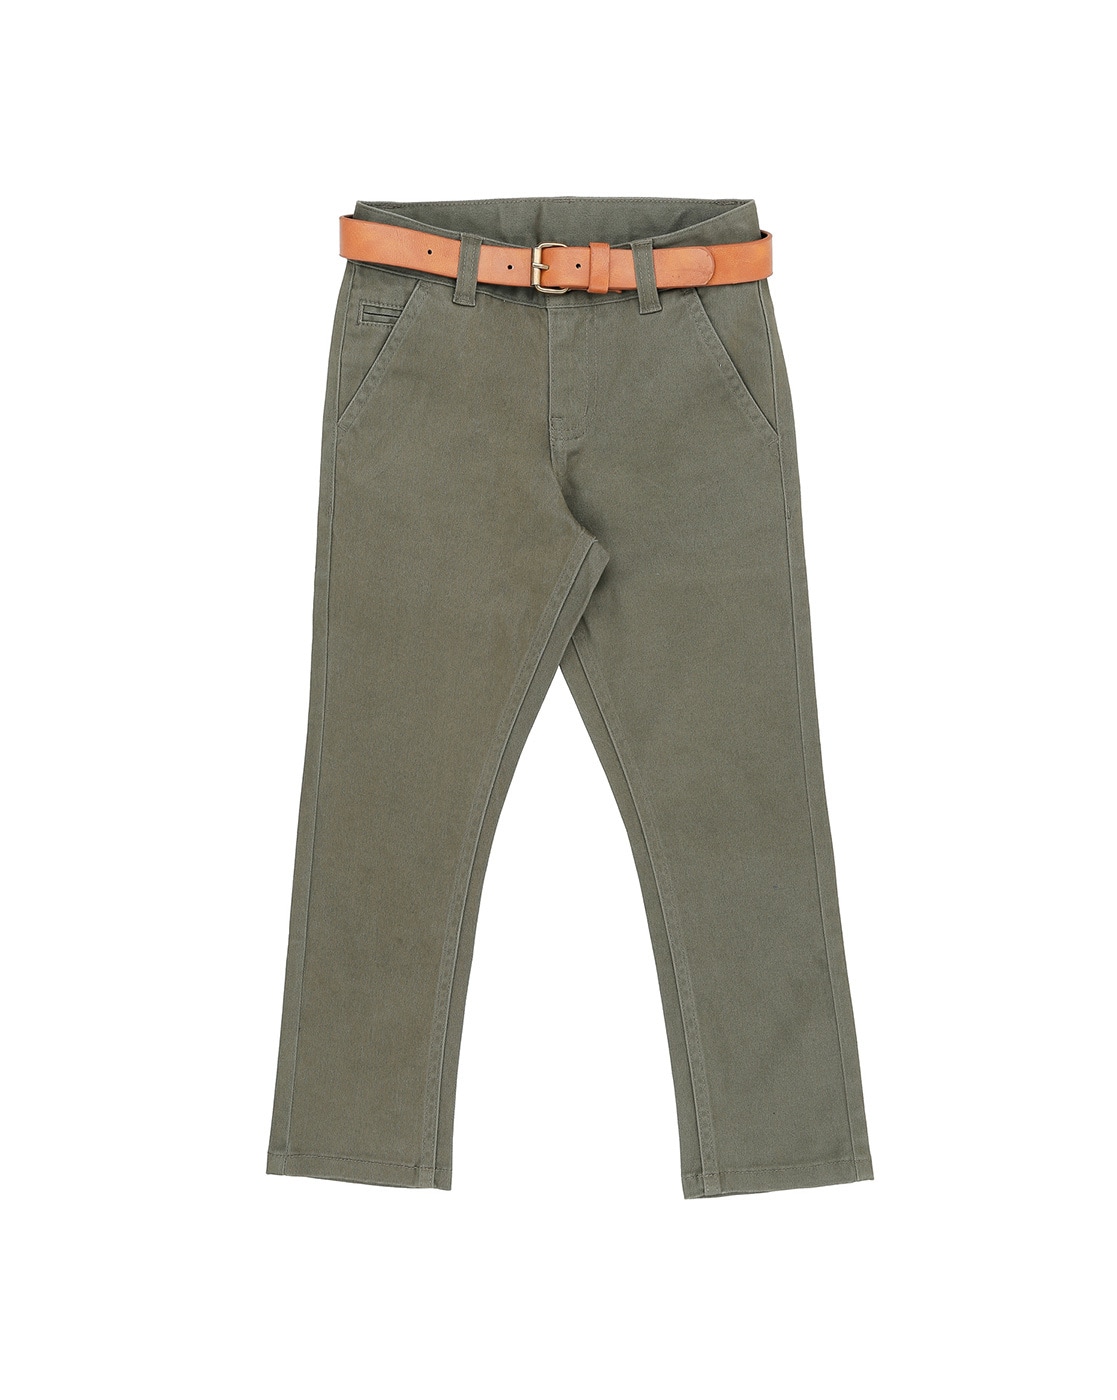 Buy Boys Regular Fit Cotton Stretch Trouser Online | Indian Terrain